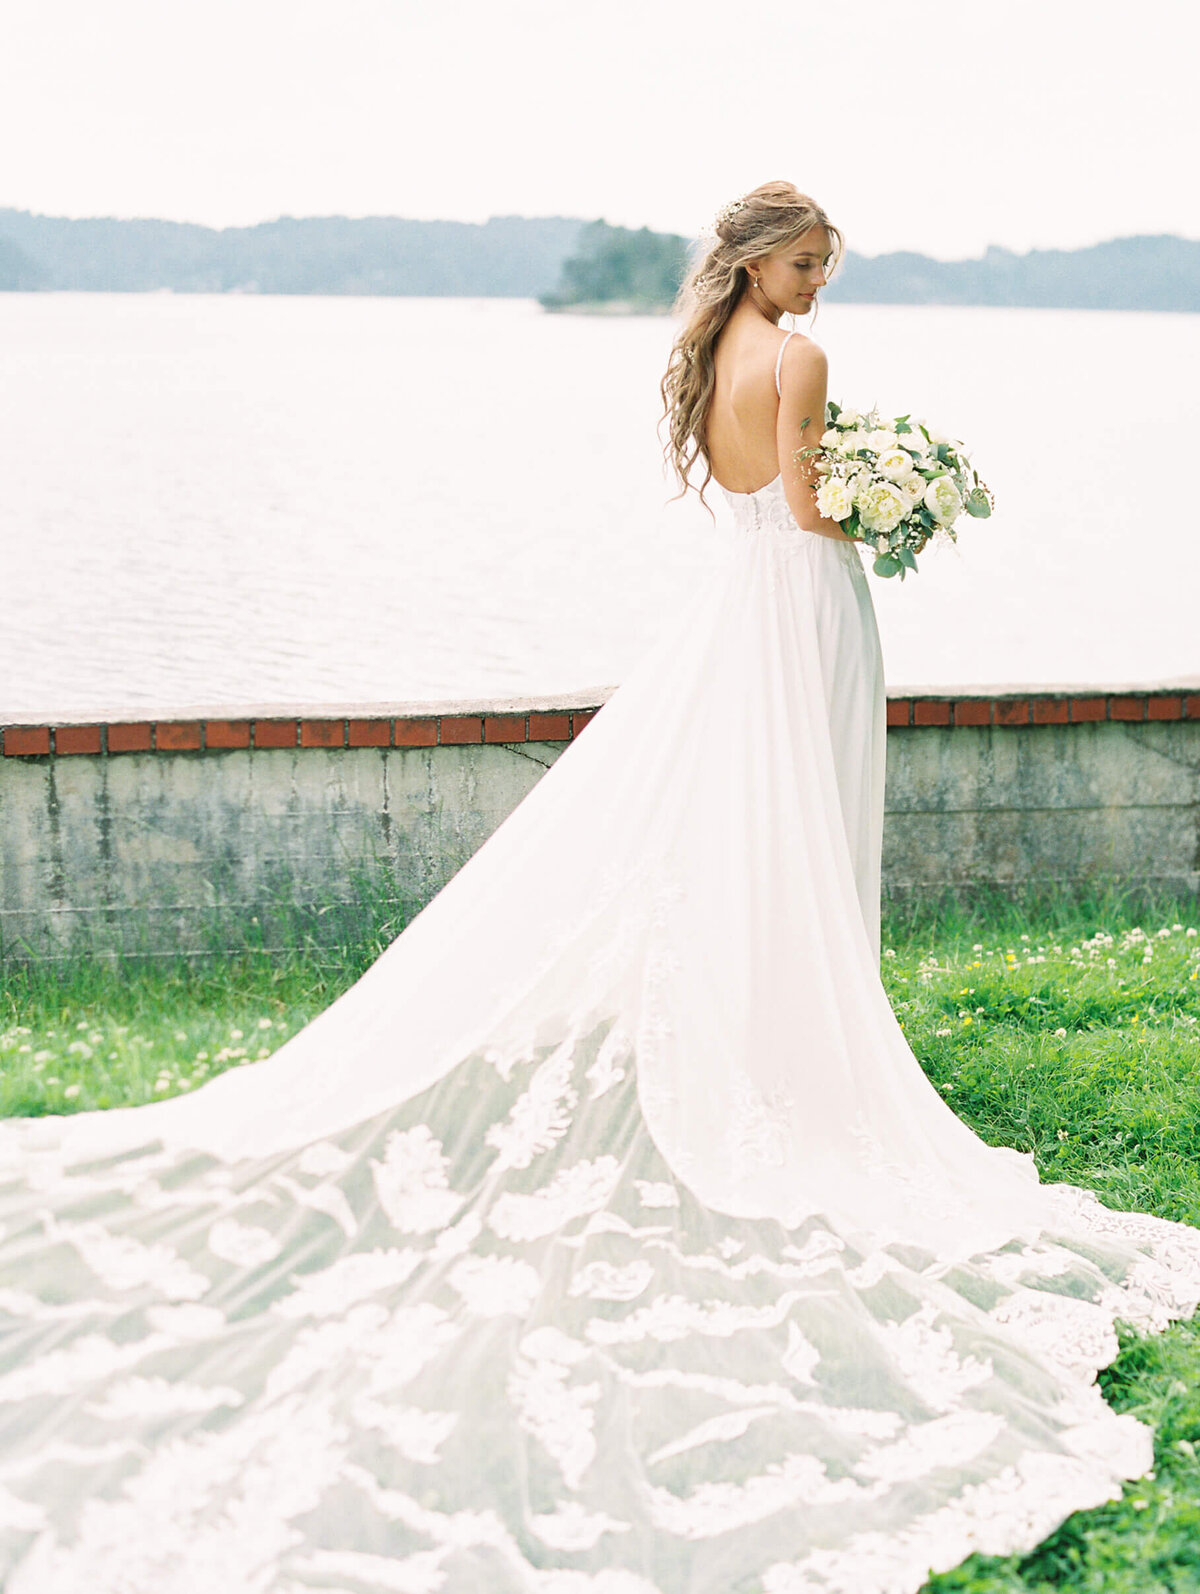 Lisa-Leanne-Photography_Bergen-Norway-Wedding_International-Wedding-Photographer_Destination-Wedding-Photographer_24